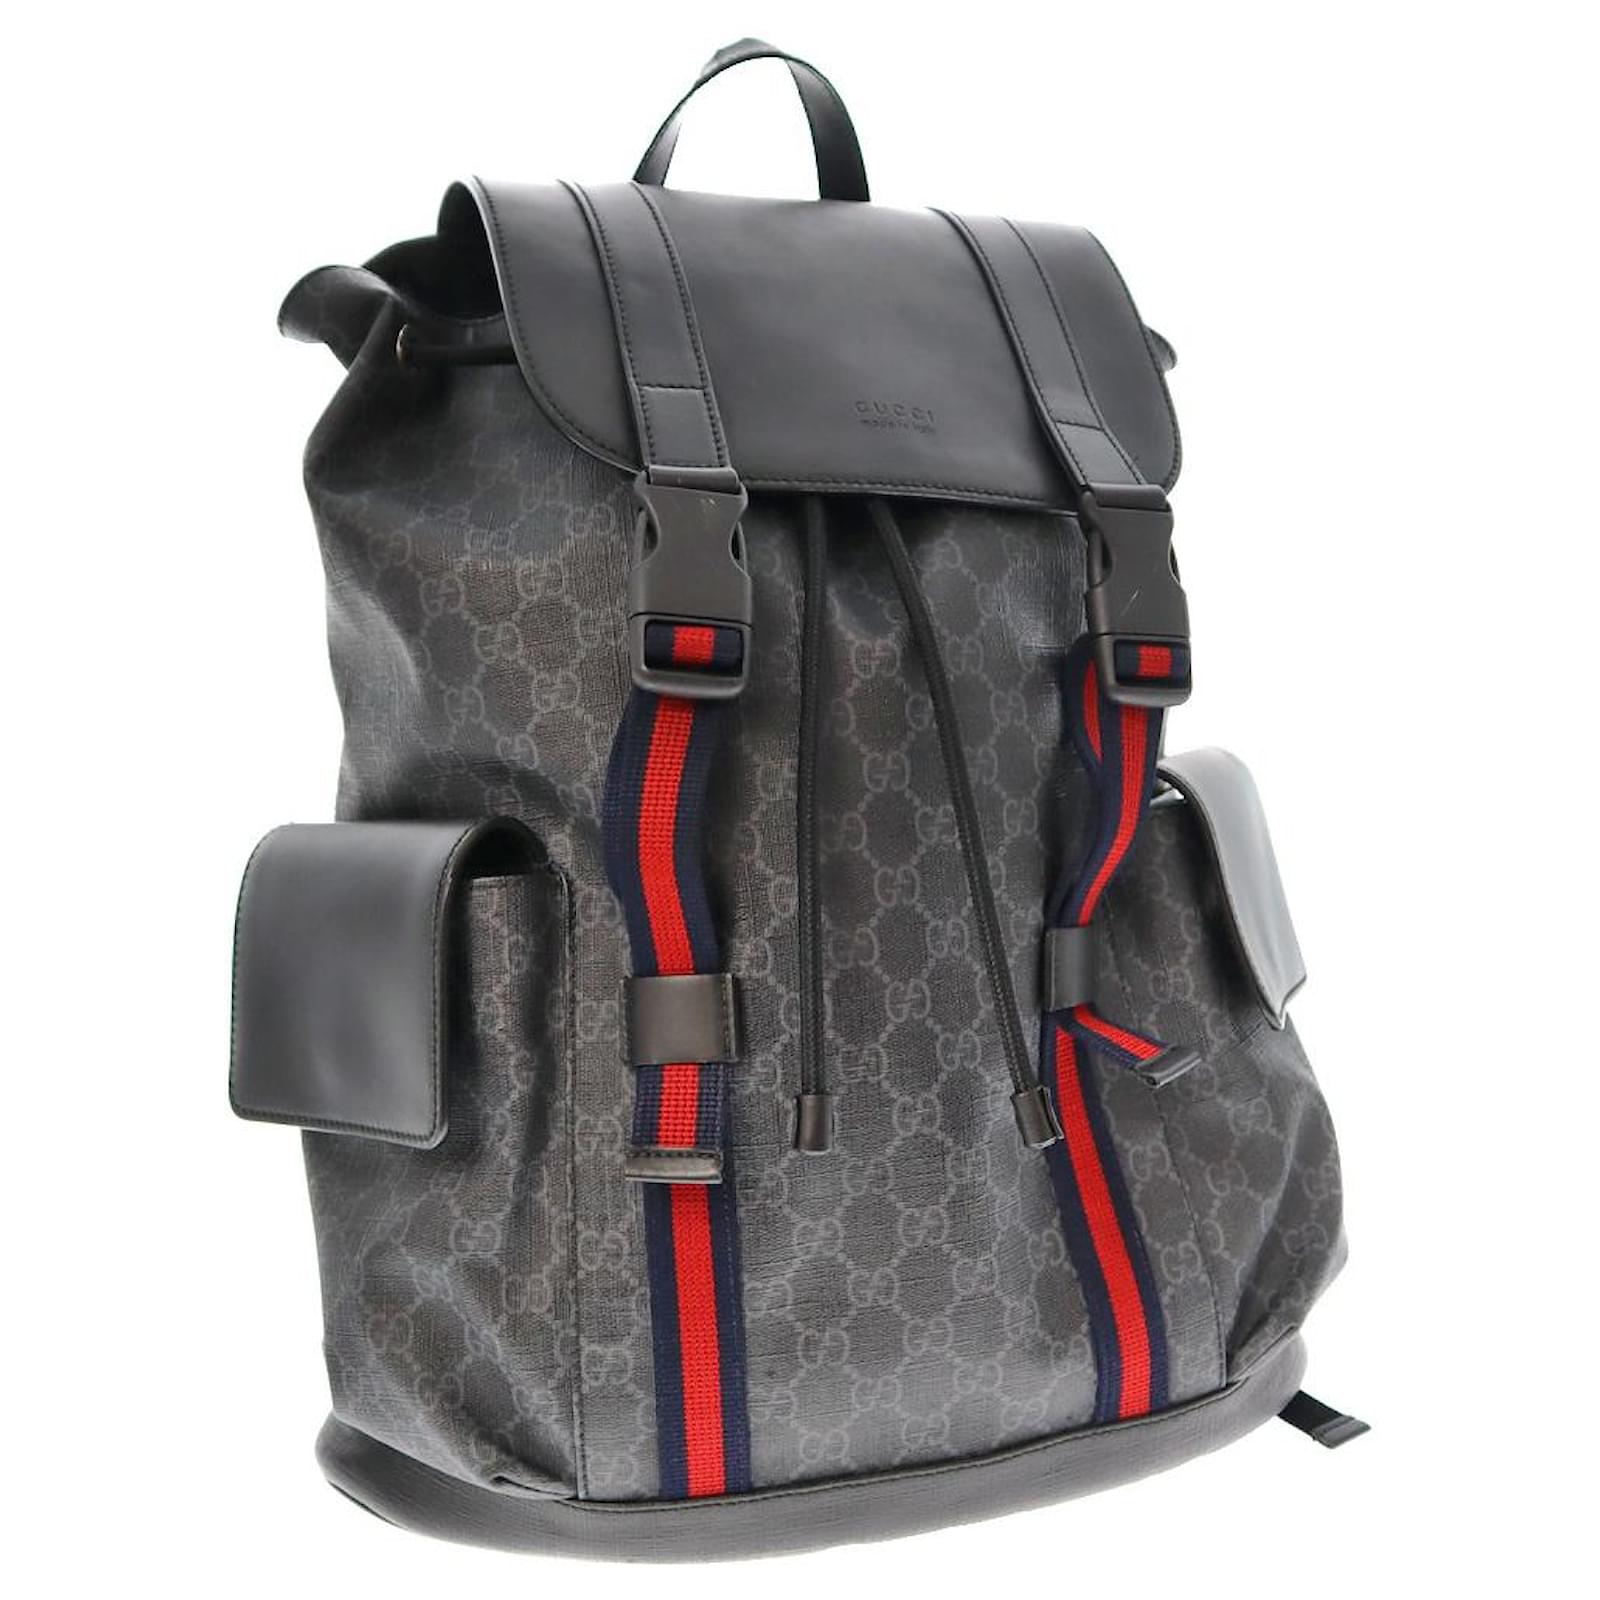 Gucci GG Black Supreme Backpack 495563